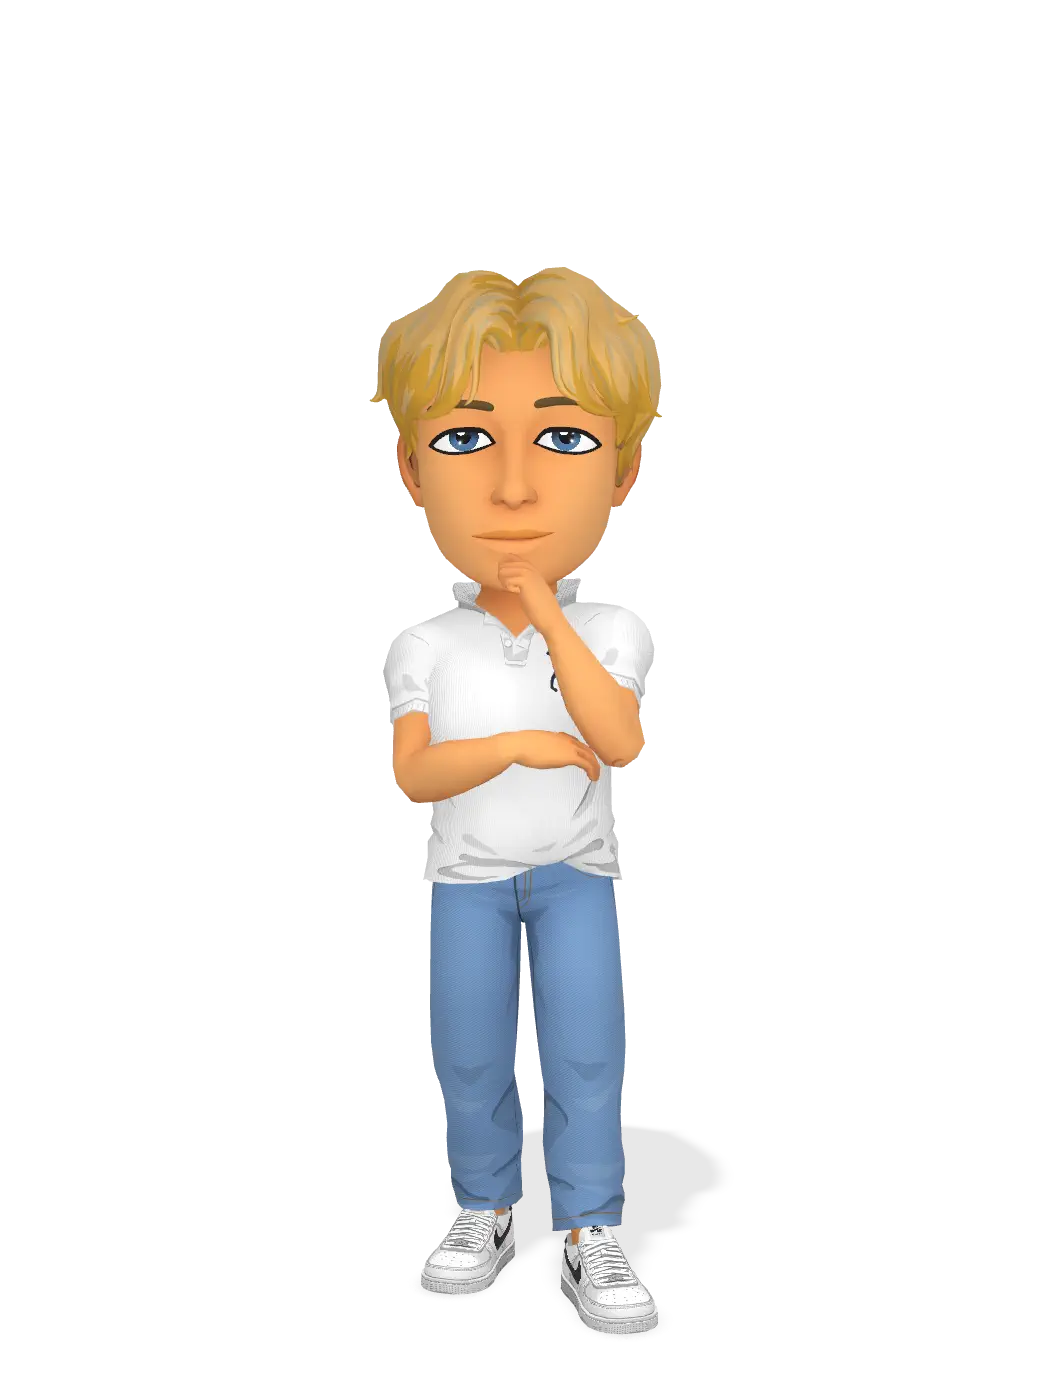 3D Bitmoji for martib1001 avatar